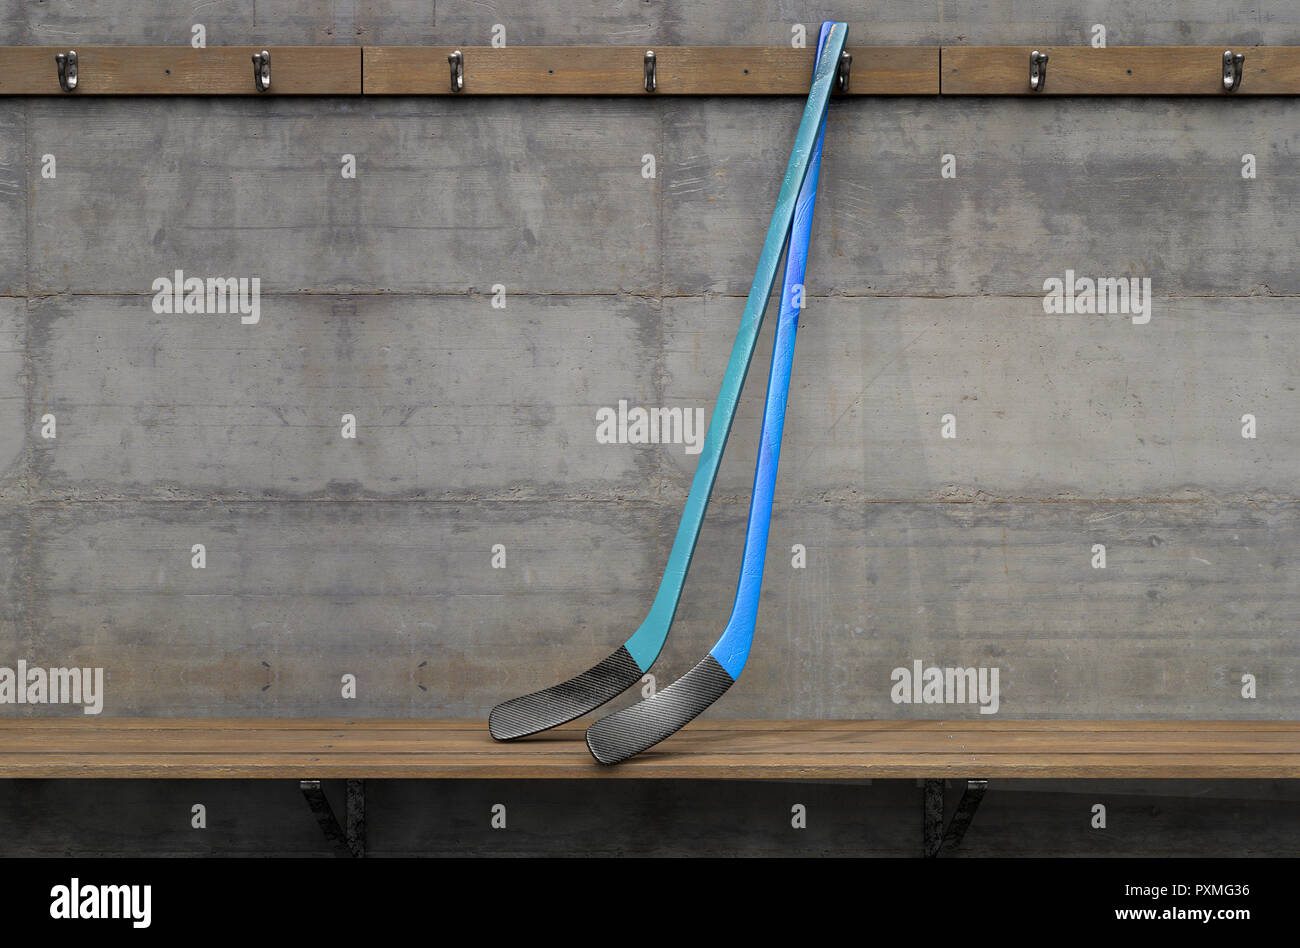 Two ice hocket sticks on a wooden bench in a rundown sports locker change room - 3D render Stock Photo